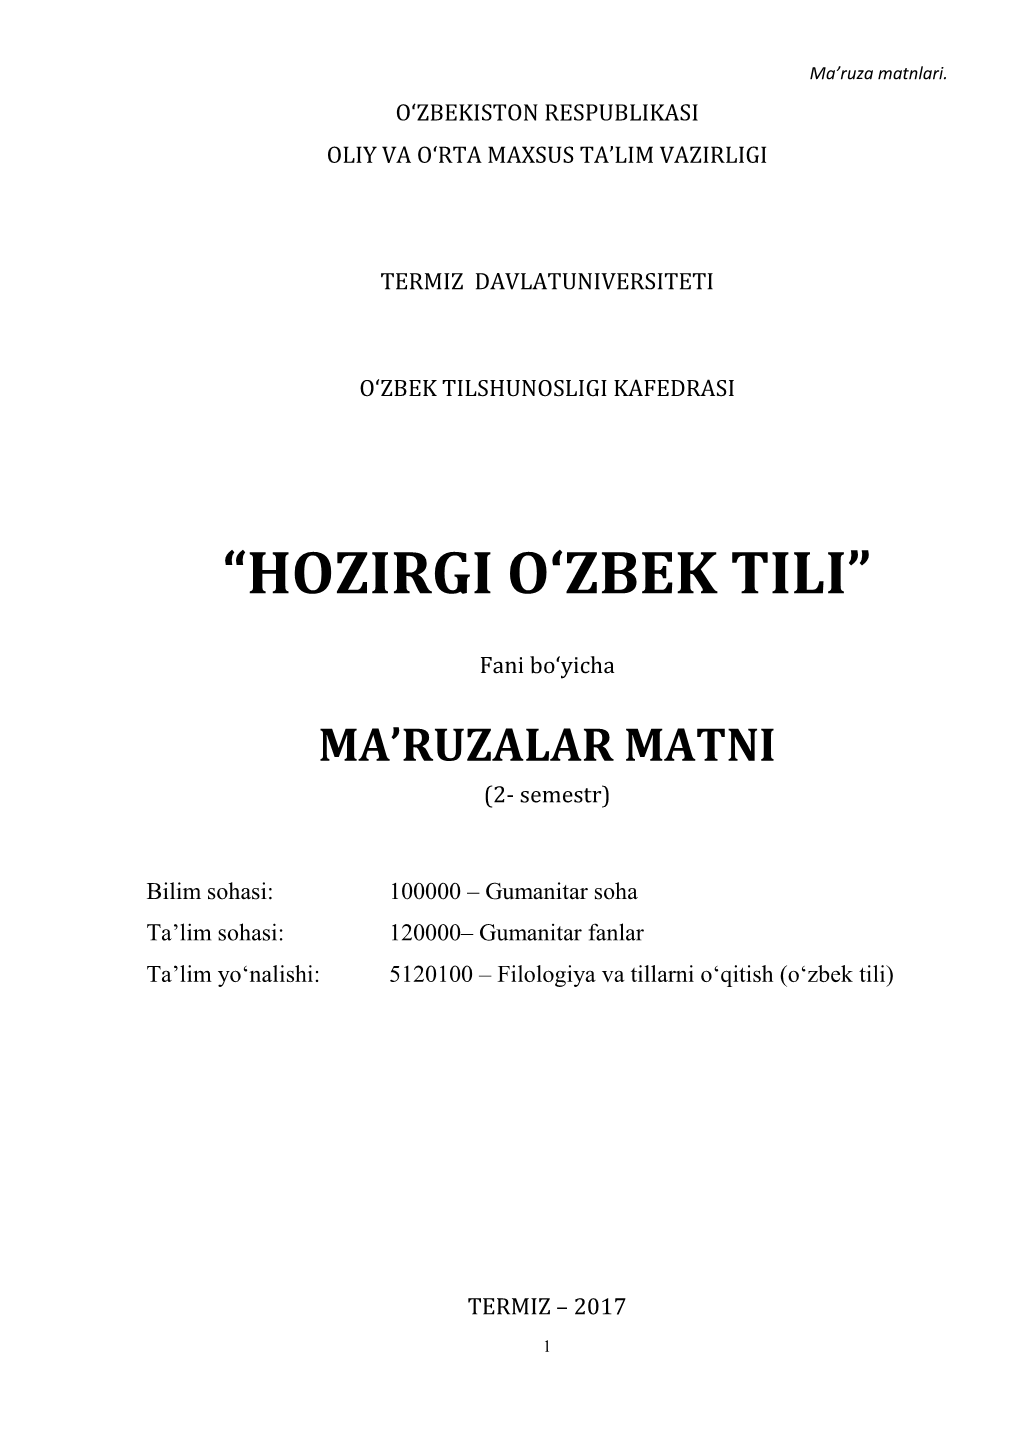 “Hozirgi O'zbek Tili”